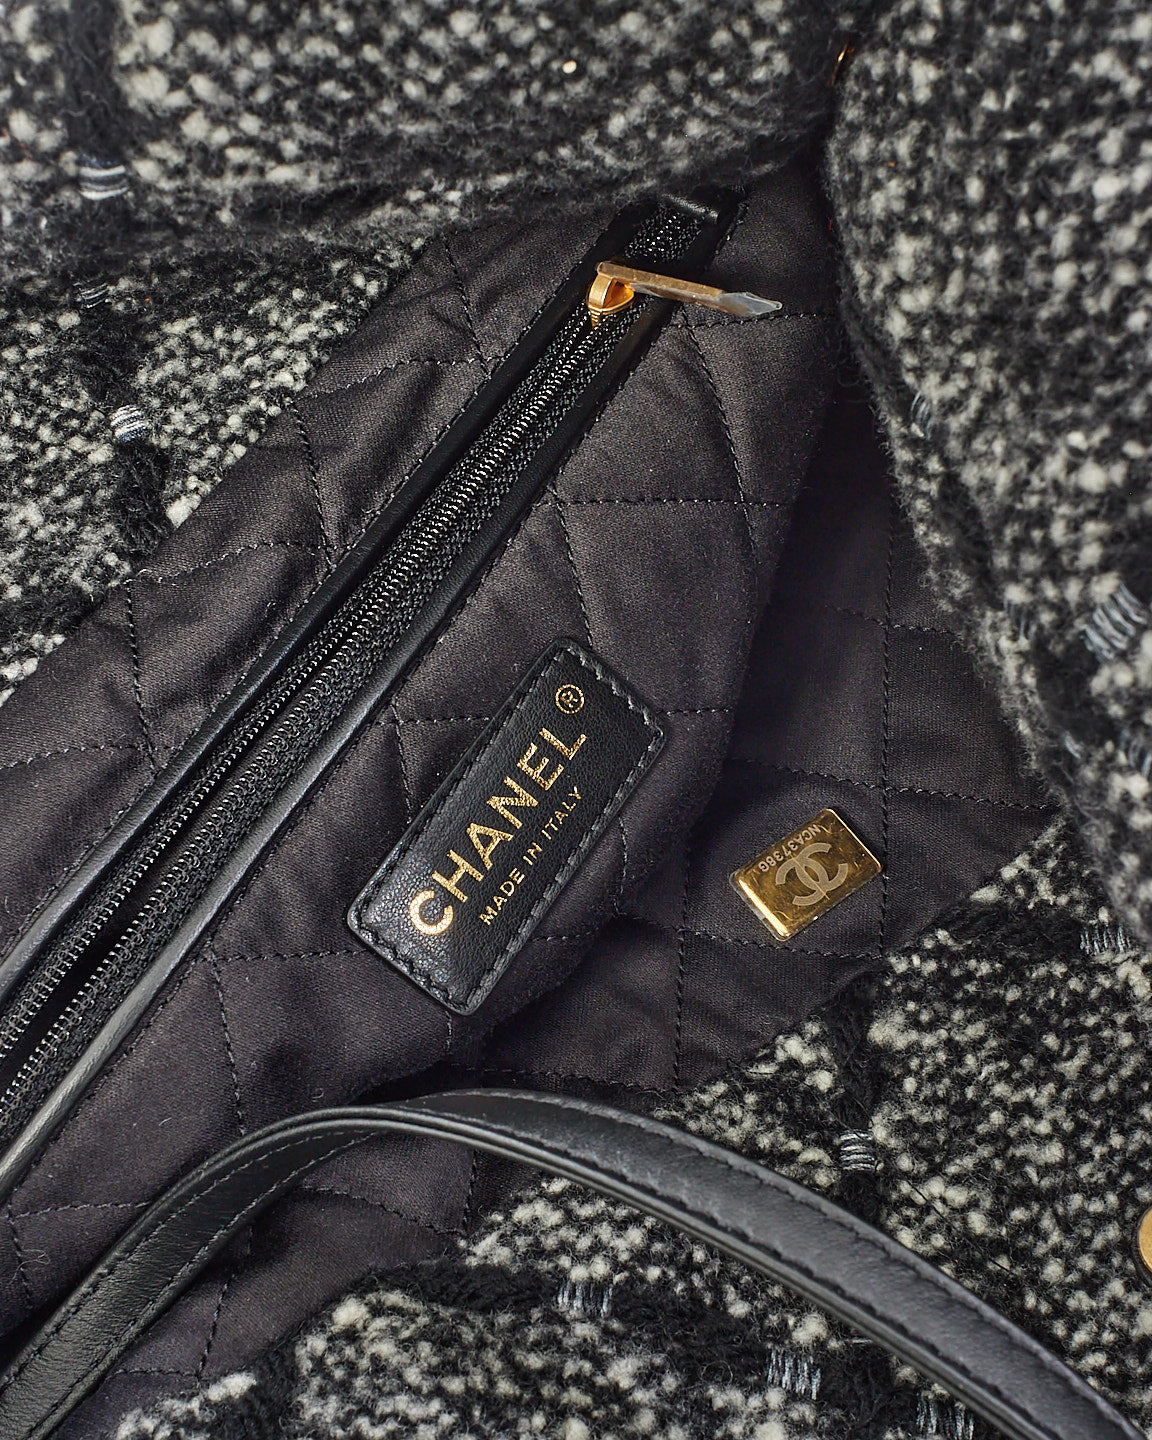 Chanel Black & Ecru Tweed Chanel 22 Bag